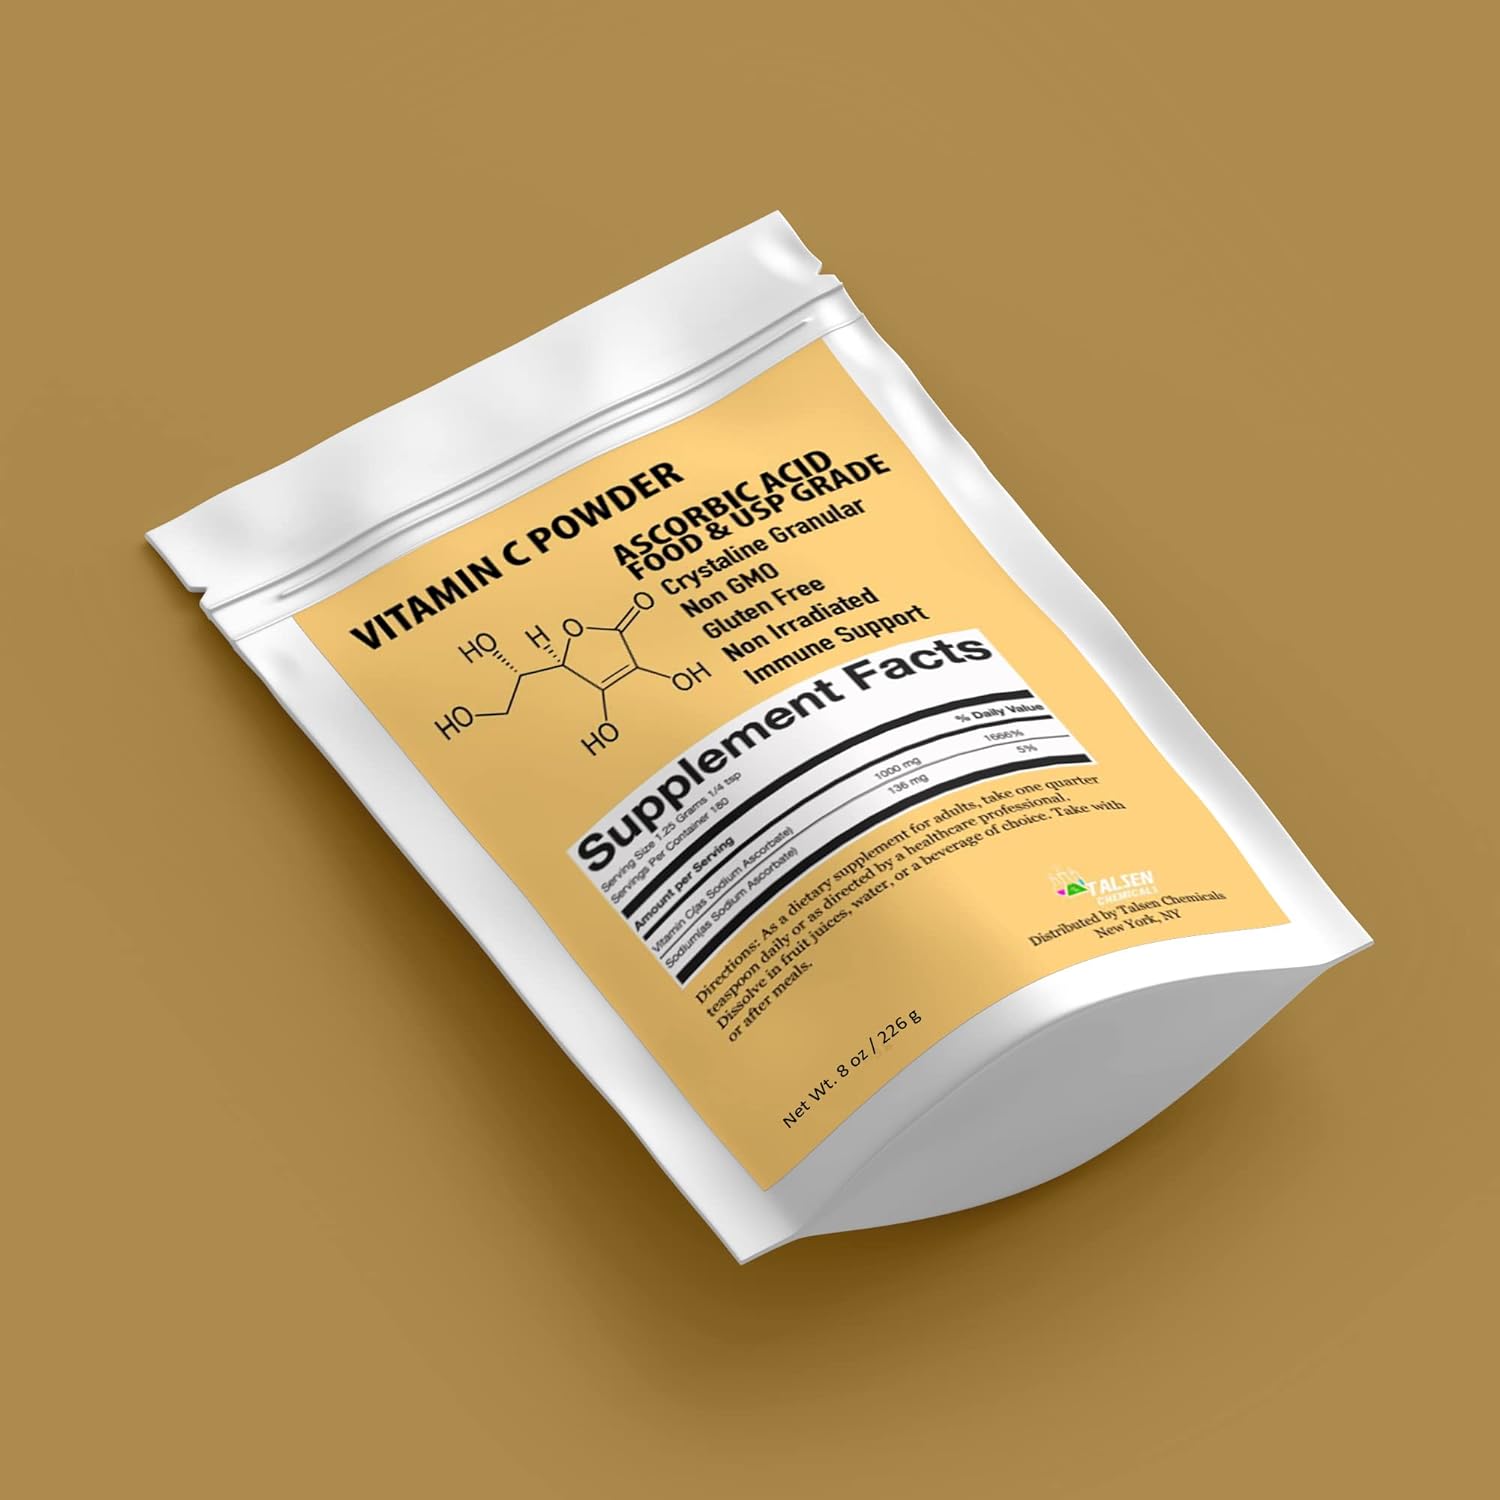 Talsen Chemicals Pure Vitamin C Powder Organic (8 Oz / 226 g) Ascorbic Acid Powder Powerful Antioxidant for Skin DIY Skin Care